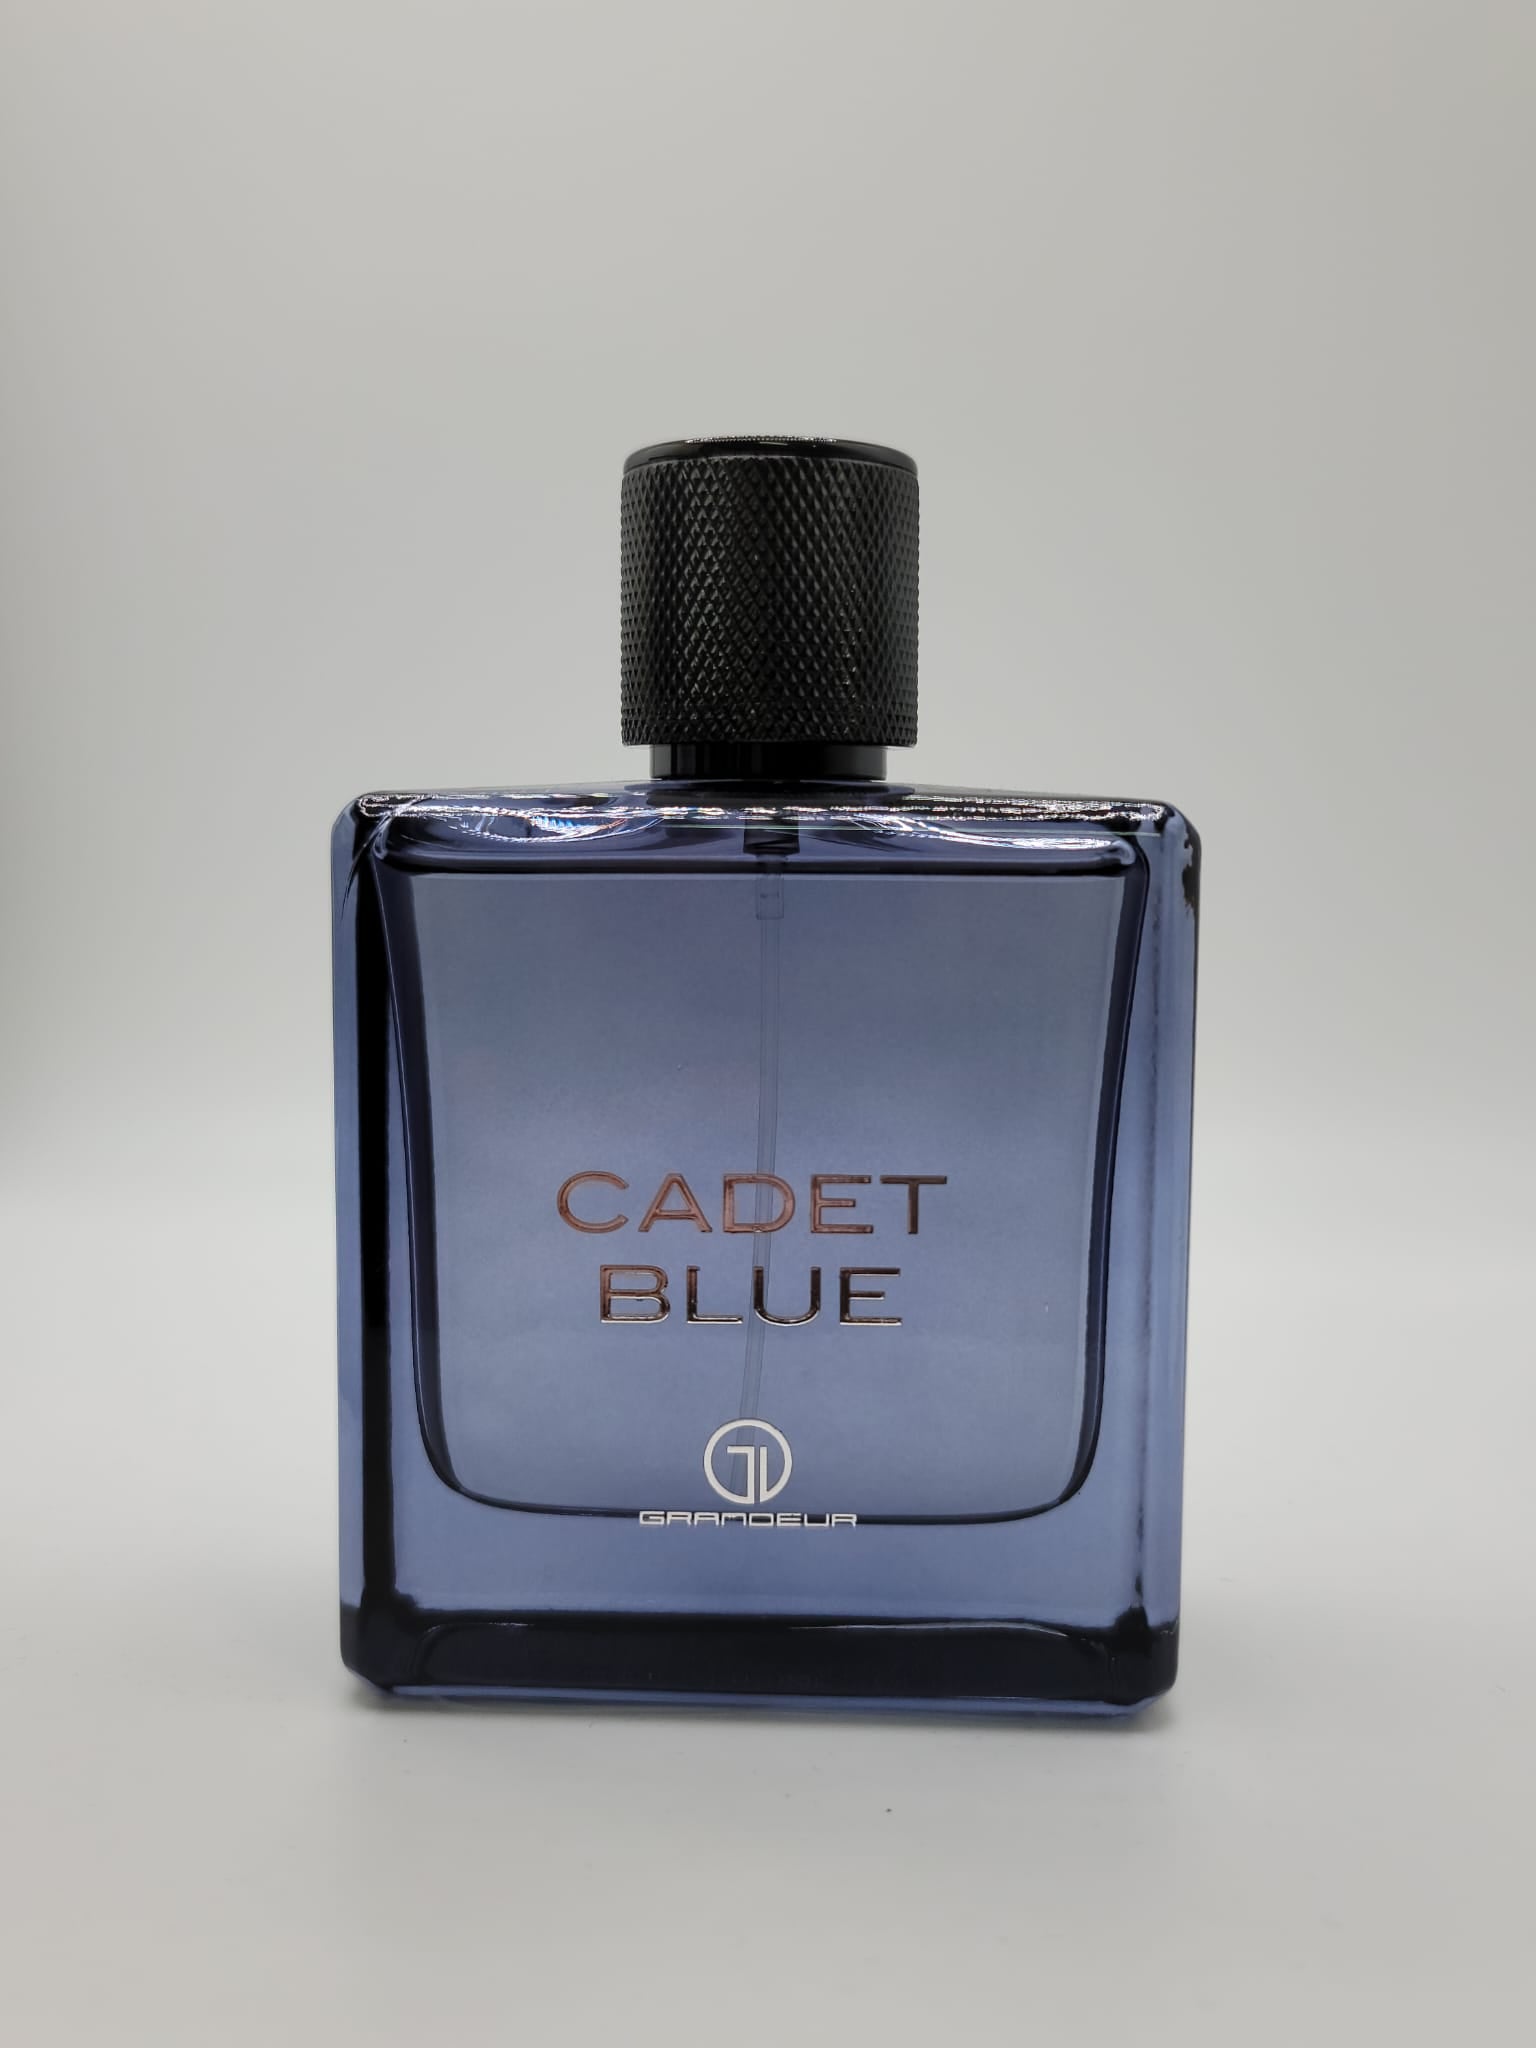 Blue De Chance EDP Perfume By Maison Alhambra 100 ML/3.4 OZ Super